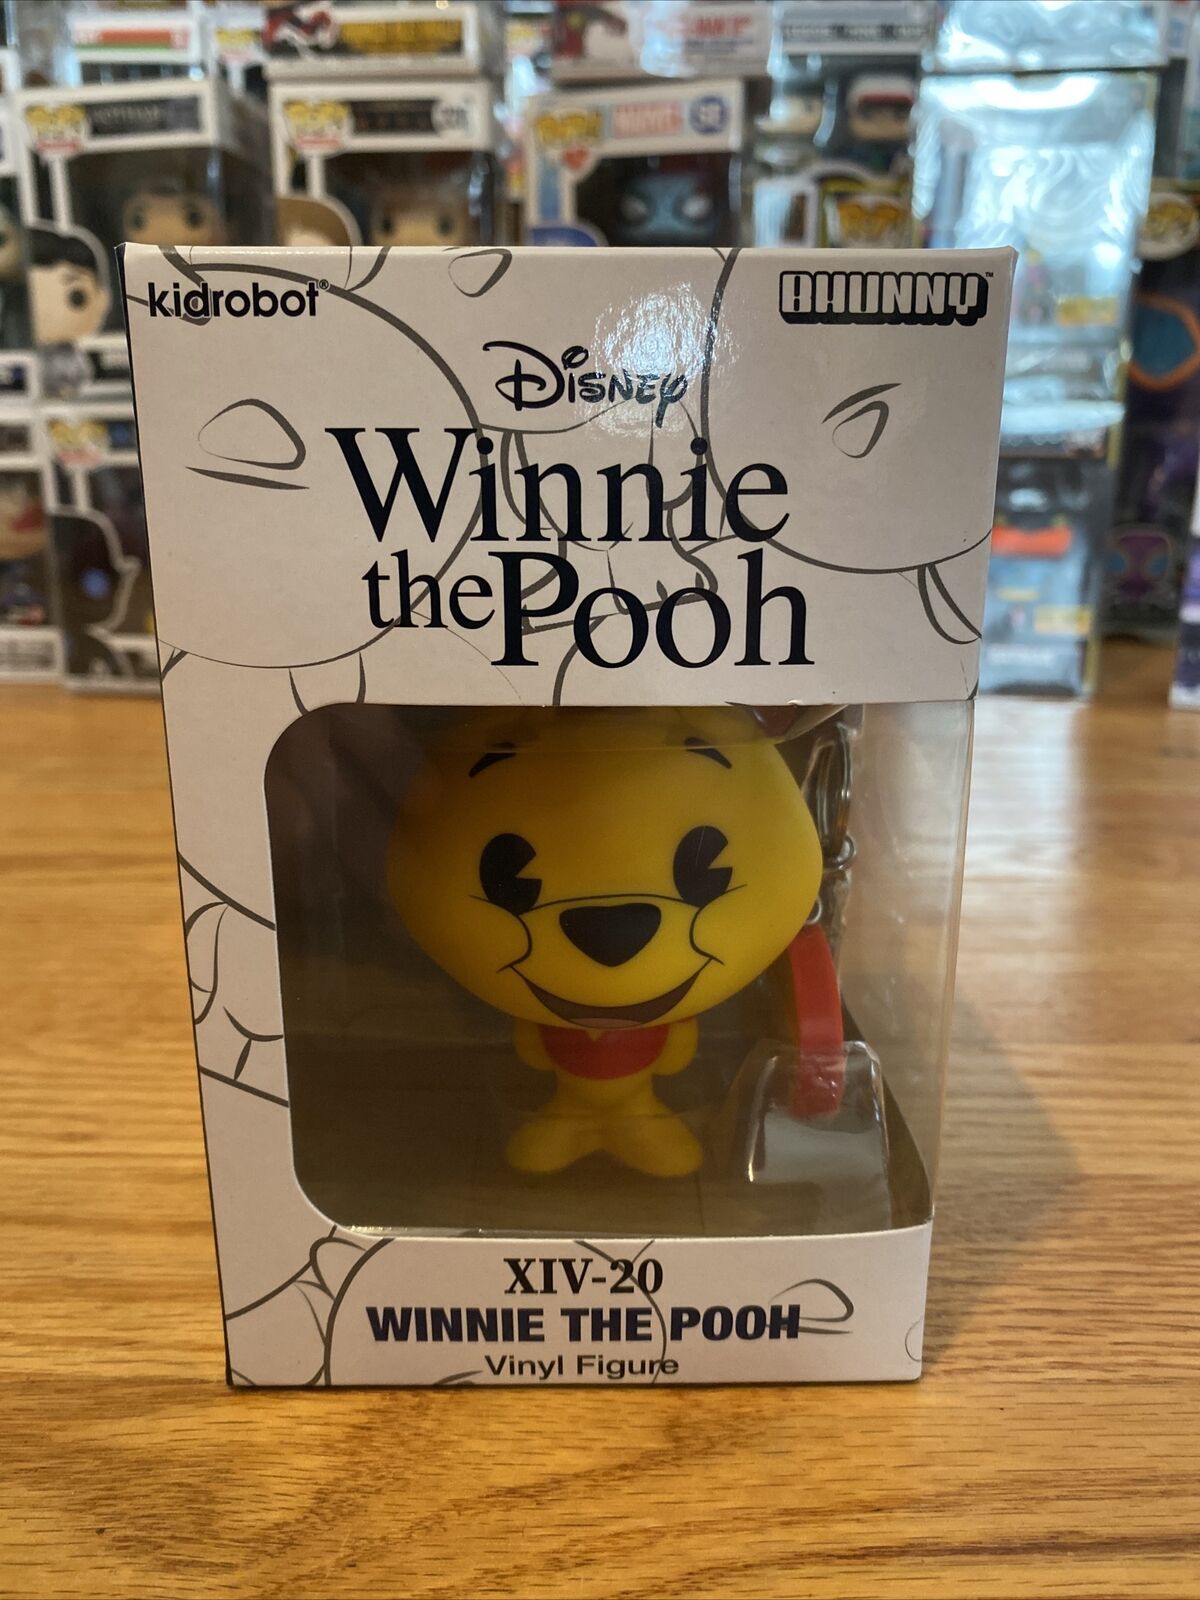 Disney Winnie The Pooh Vinyl Figure XIV-20 Kidrobot New in Box Keychain Included